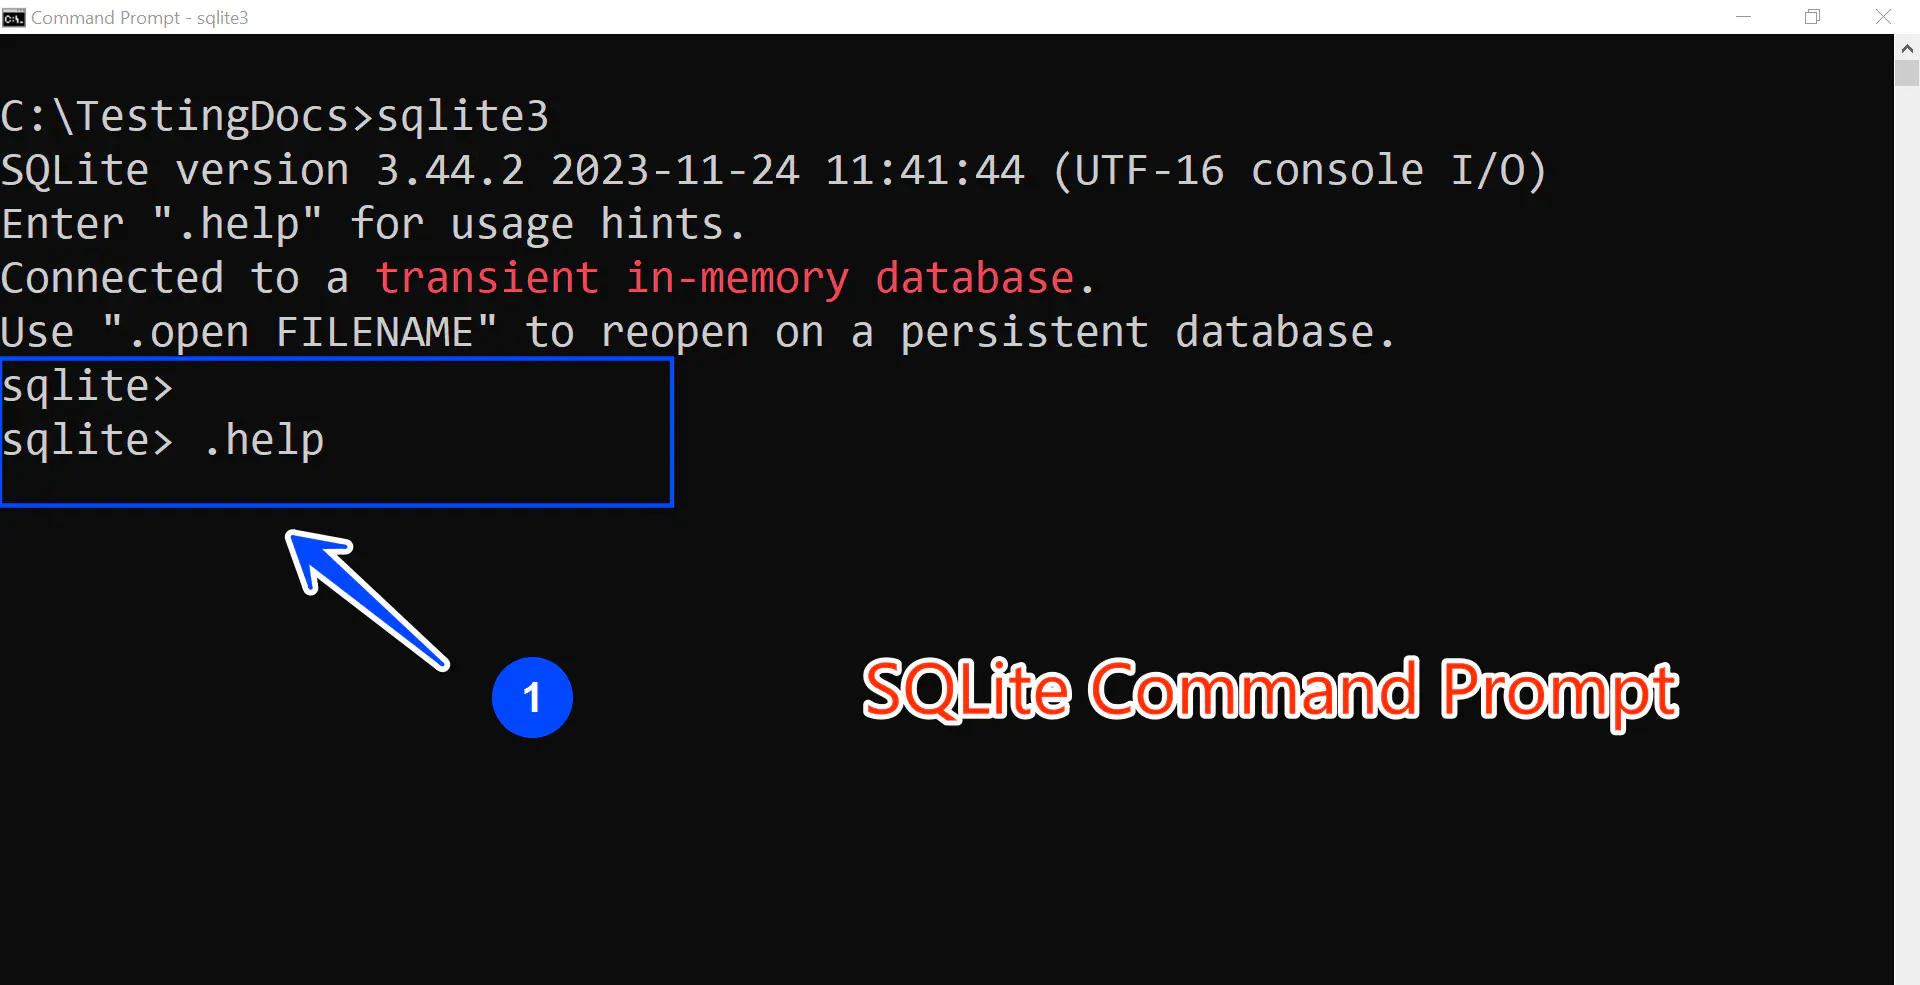 SQLite Command Prompt